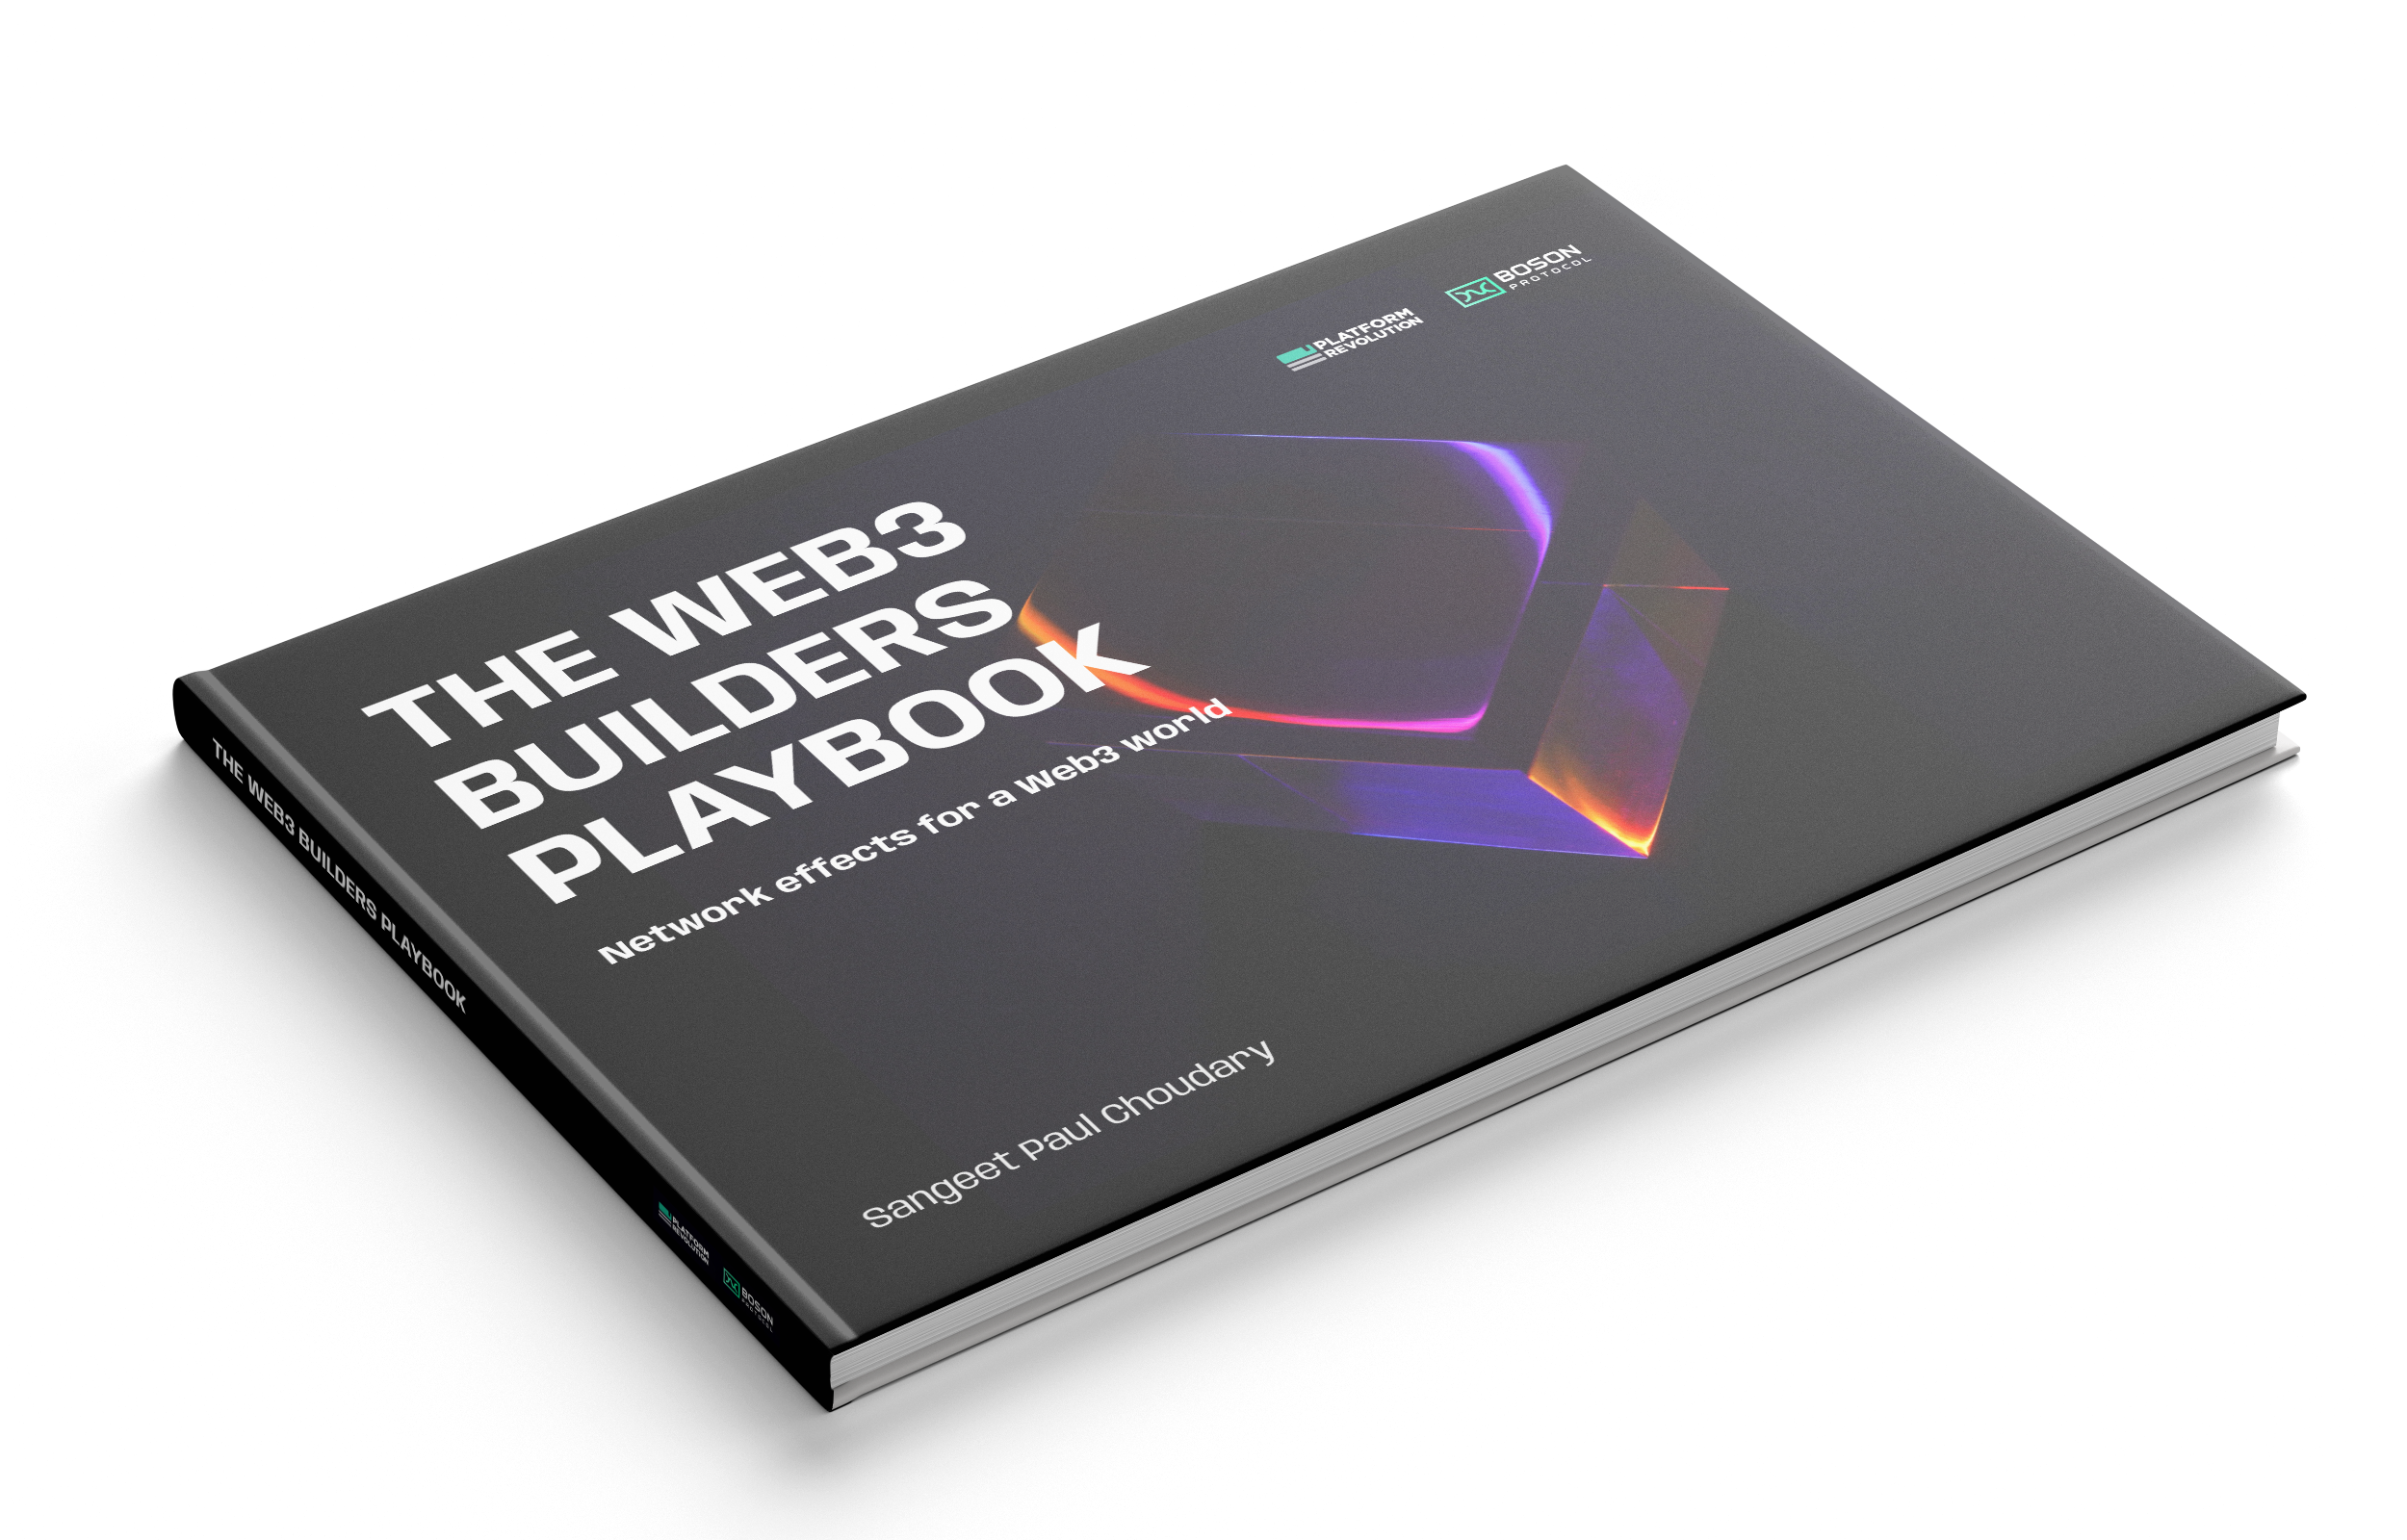 The Web3 Builders Playbook